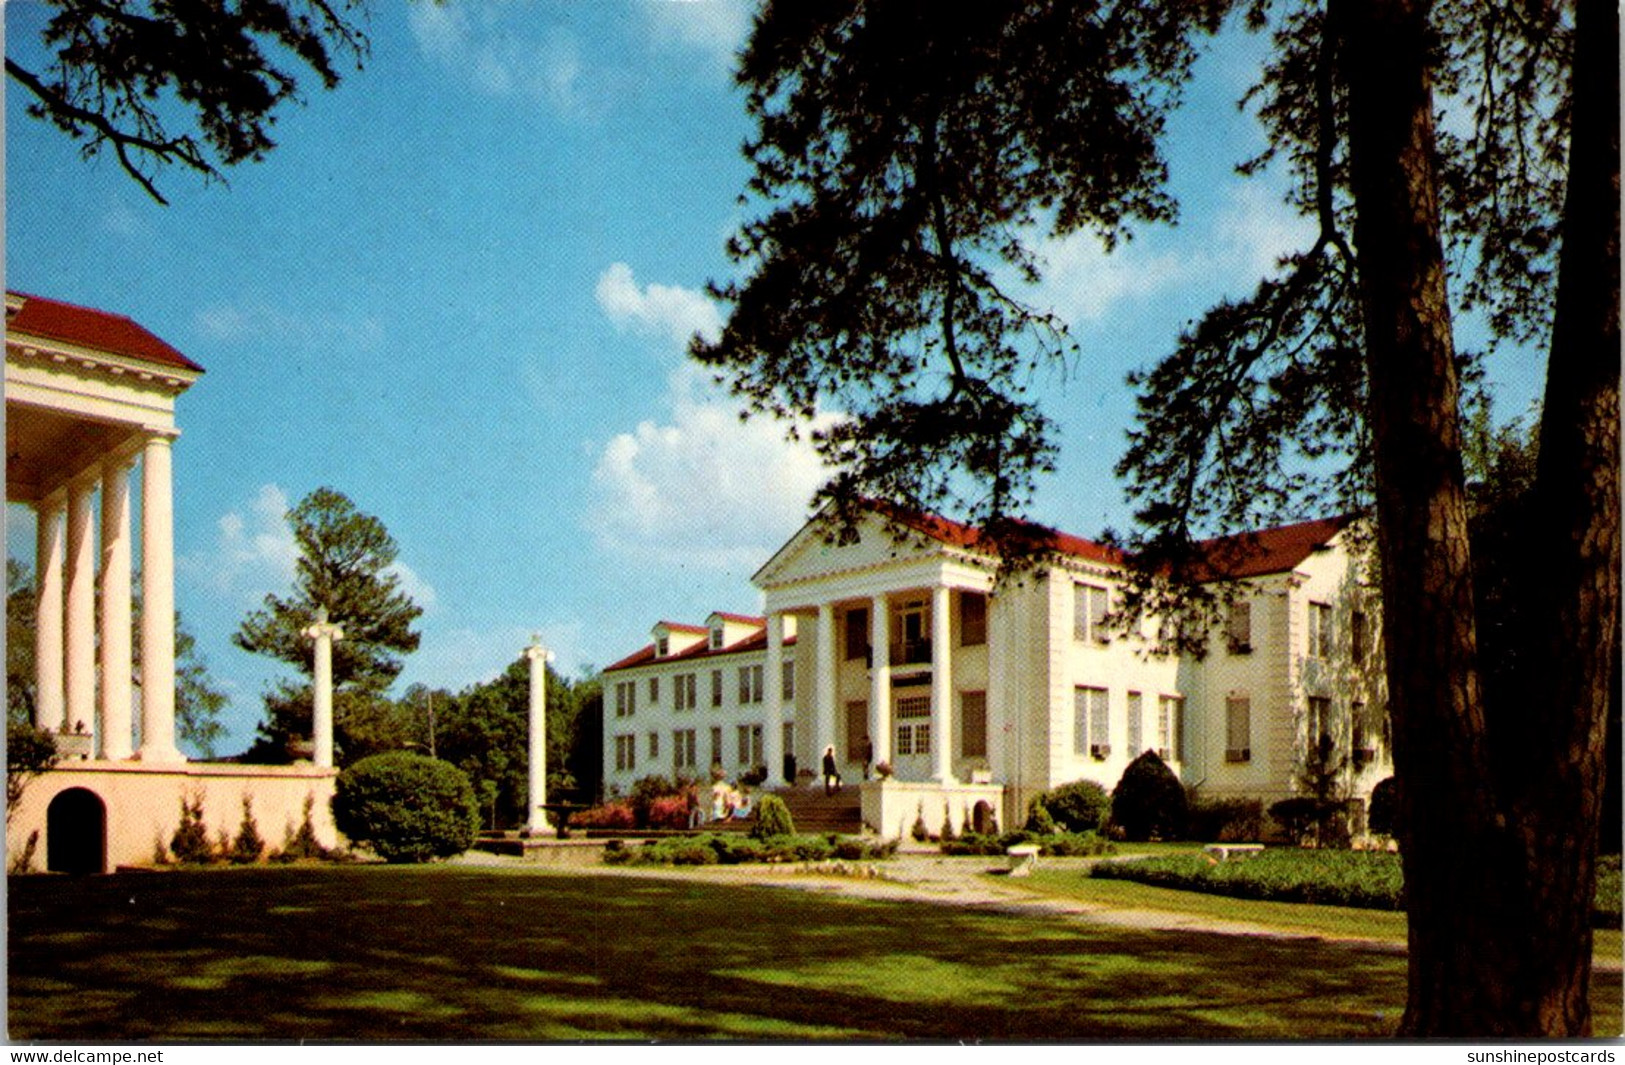 Mississippi Jackson Fitzhugh Hall And Preston Hall Belhaven College - Jackson